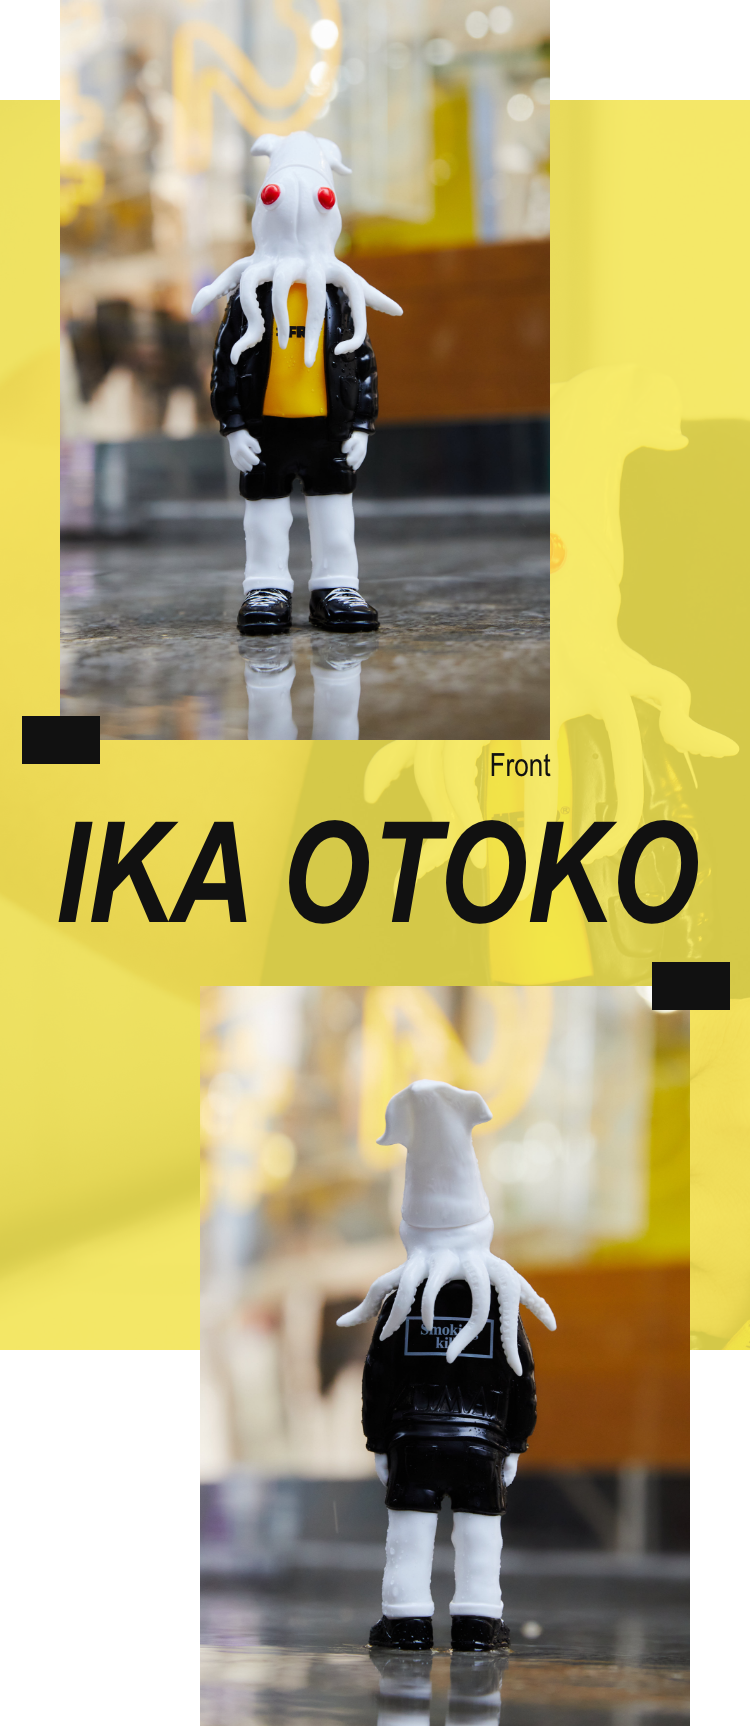 FR2 Collaboration with atmos IKA OTOKO Collection